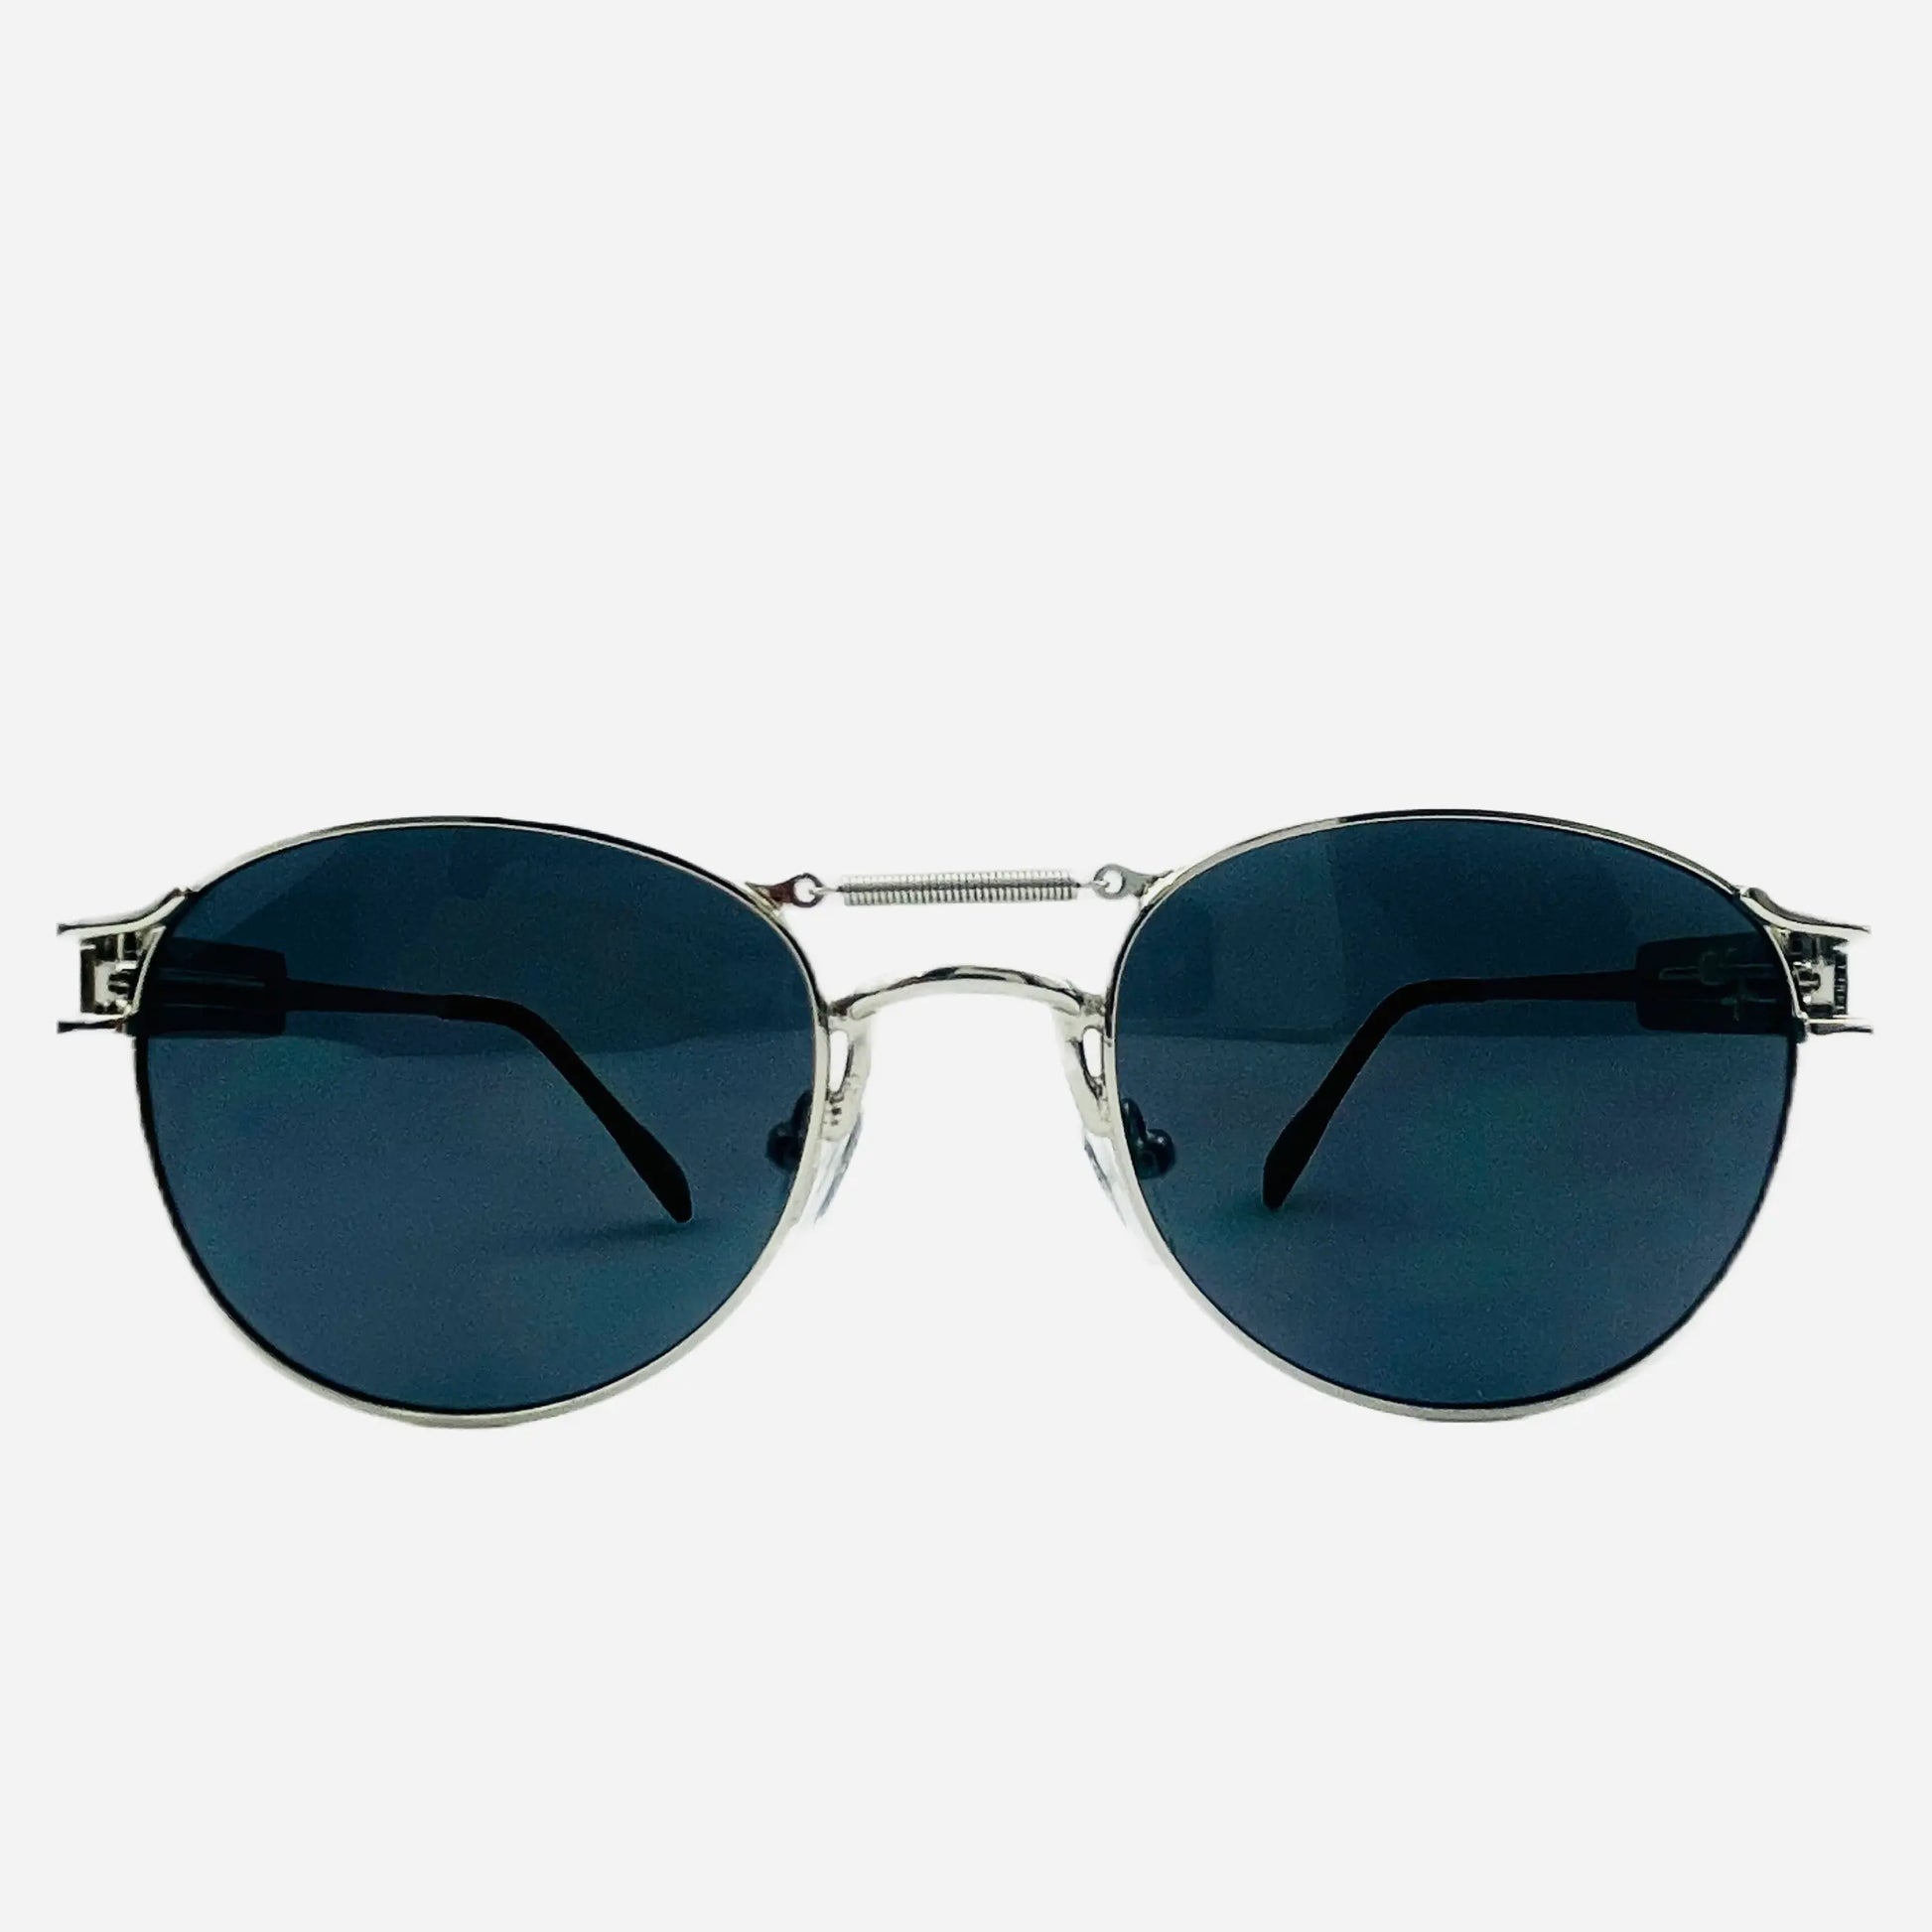 Vintage Jean Paul Gaultier Sonnenbrille Sunglasses Model 56-5107-silver